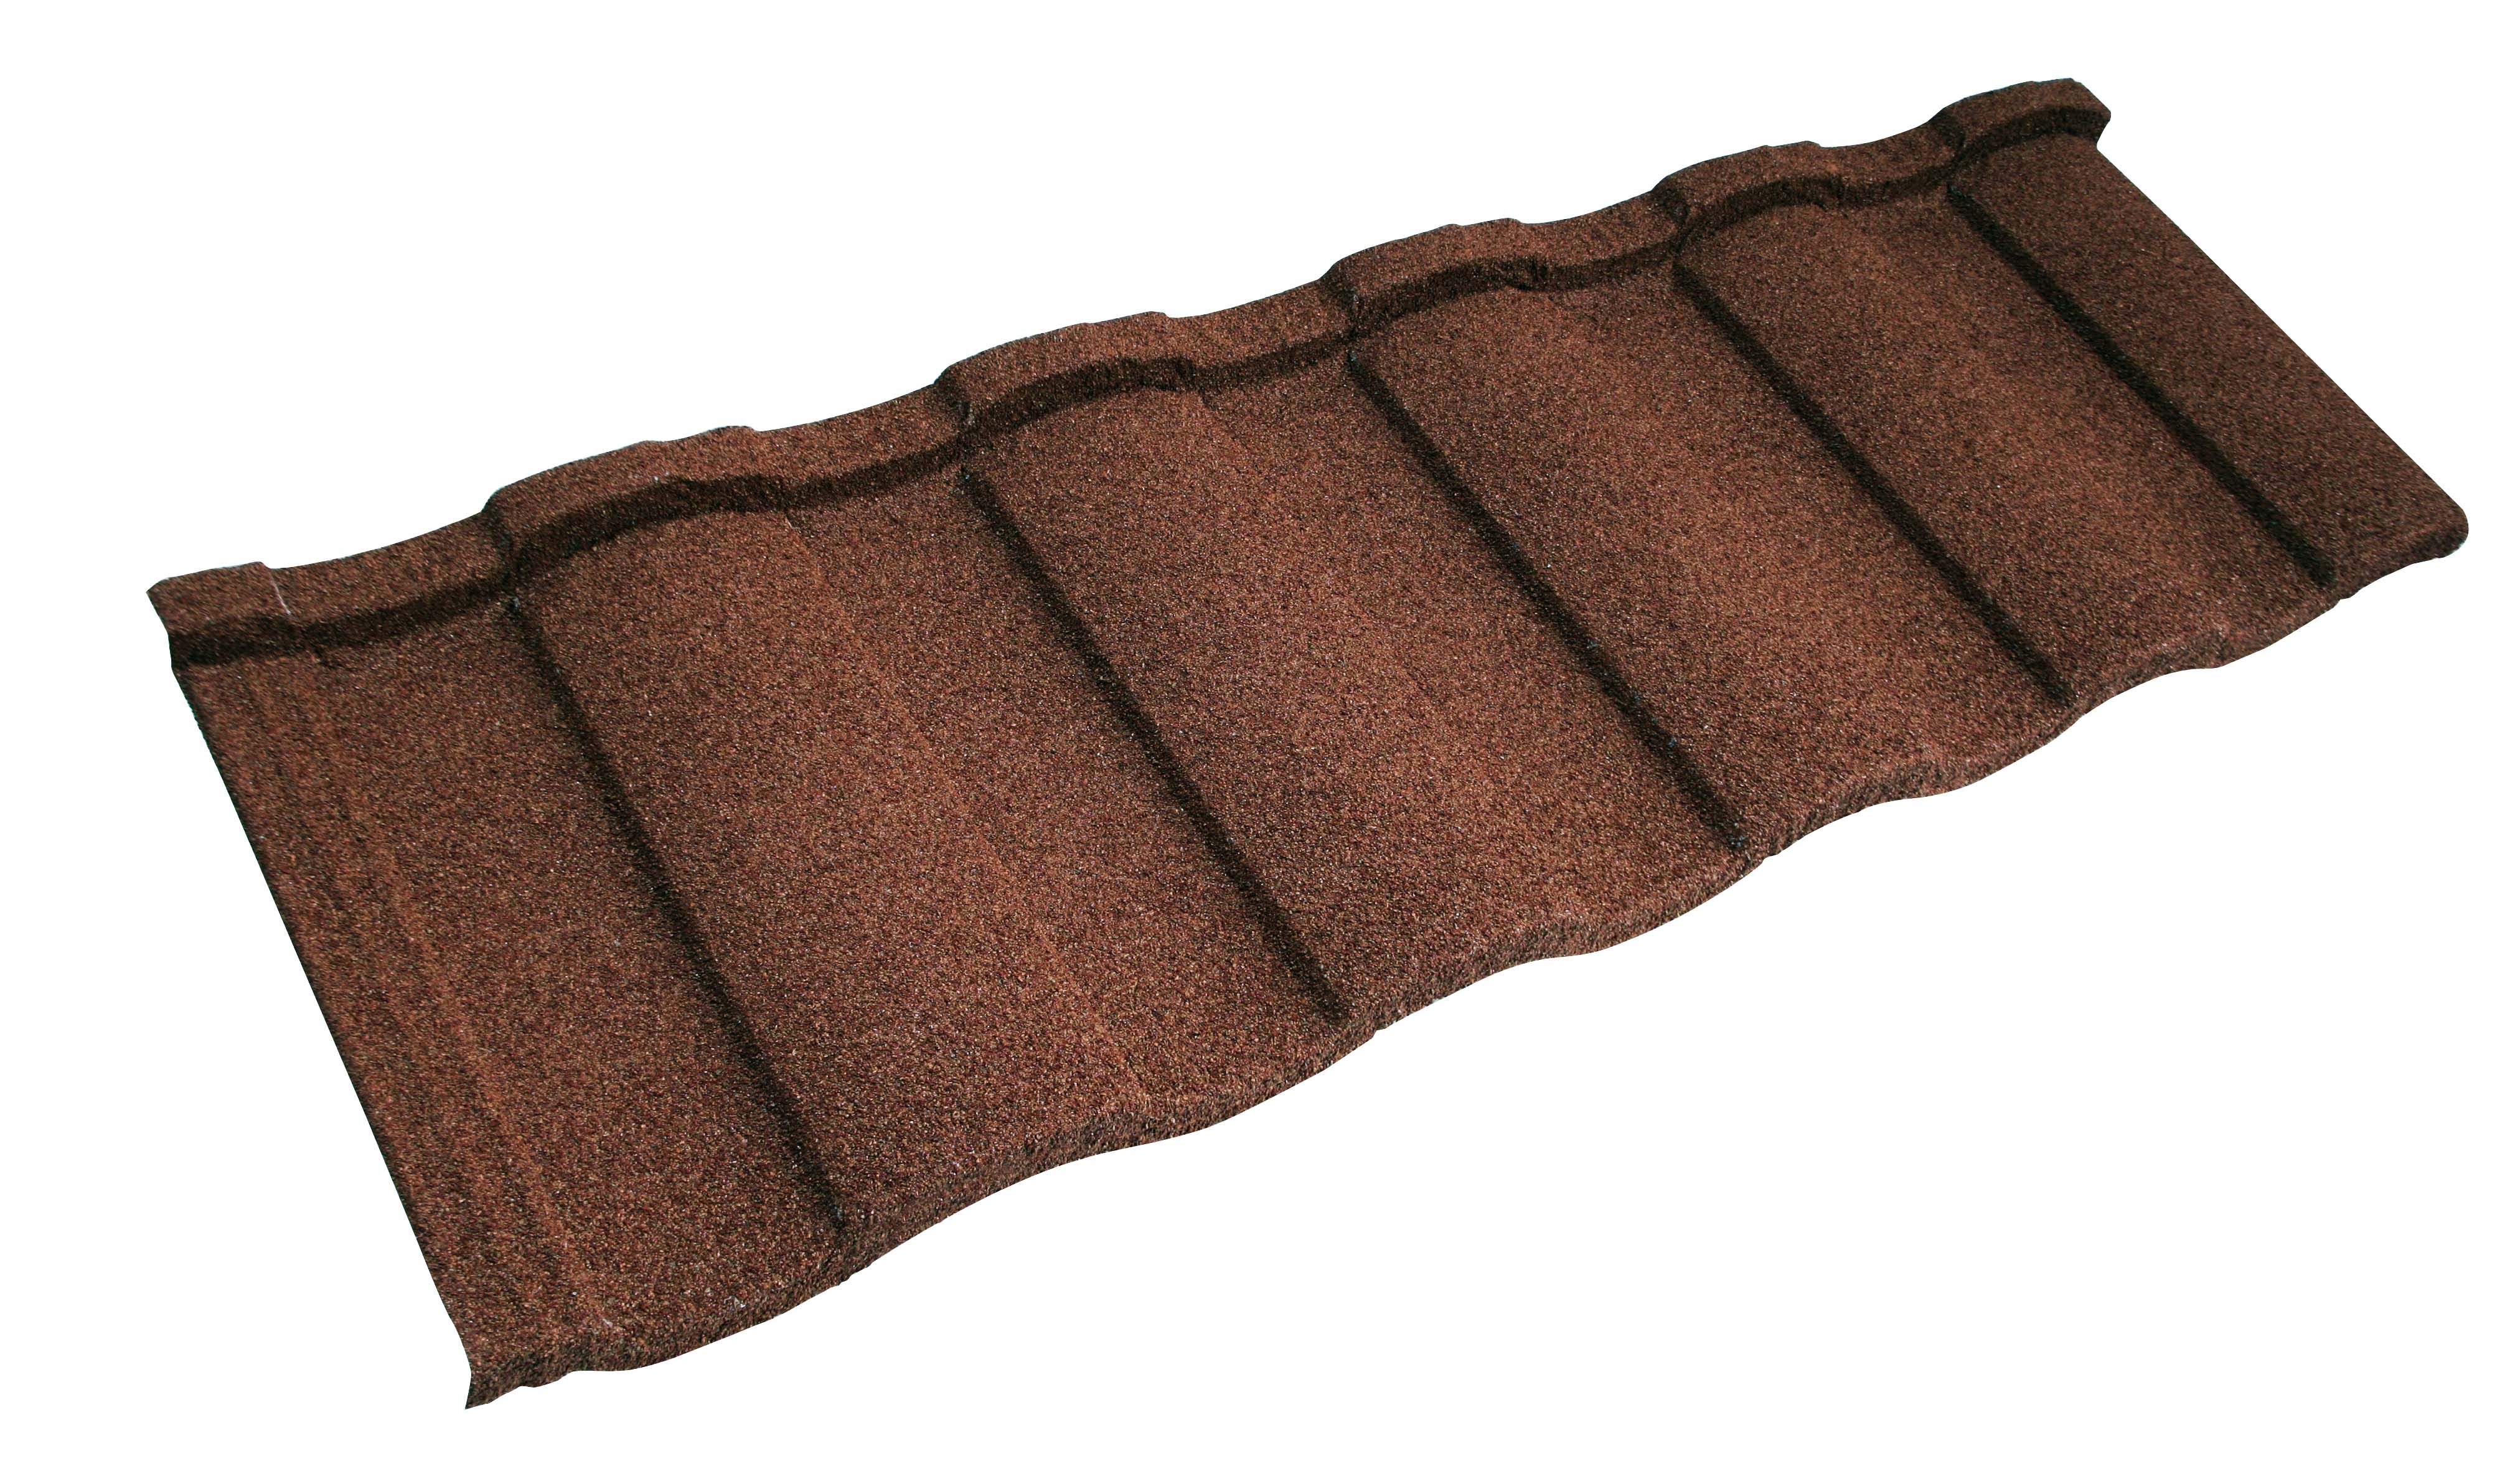 Metrotile Roman Roofing Tile in Bronze